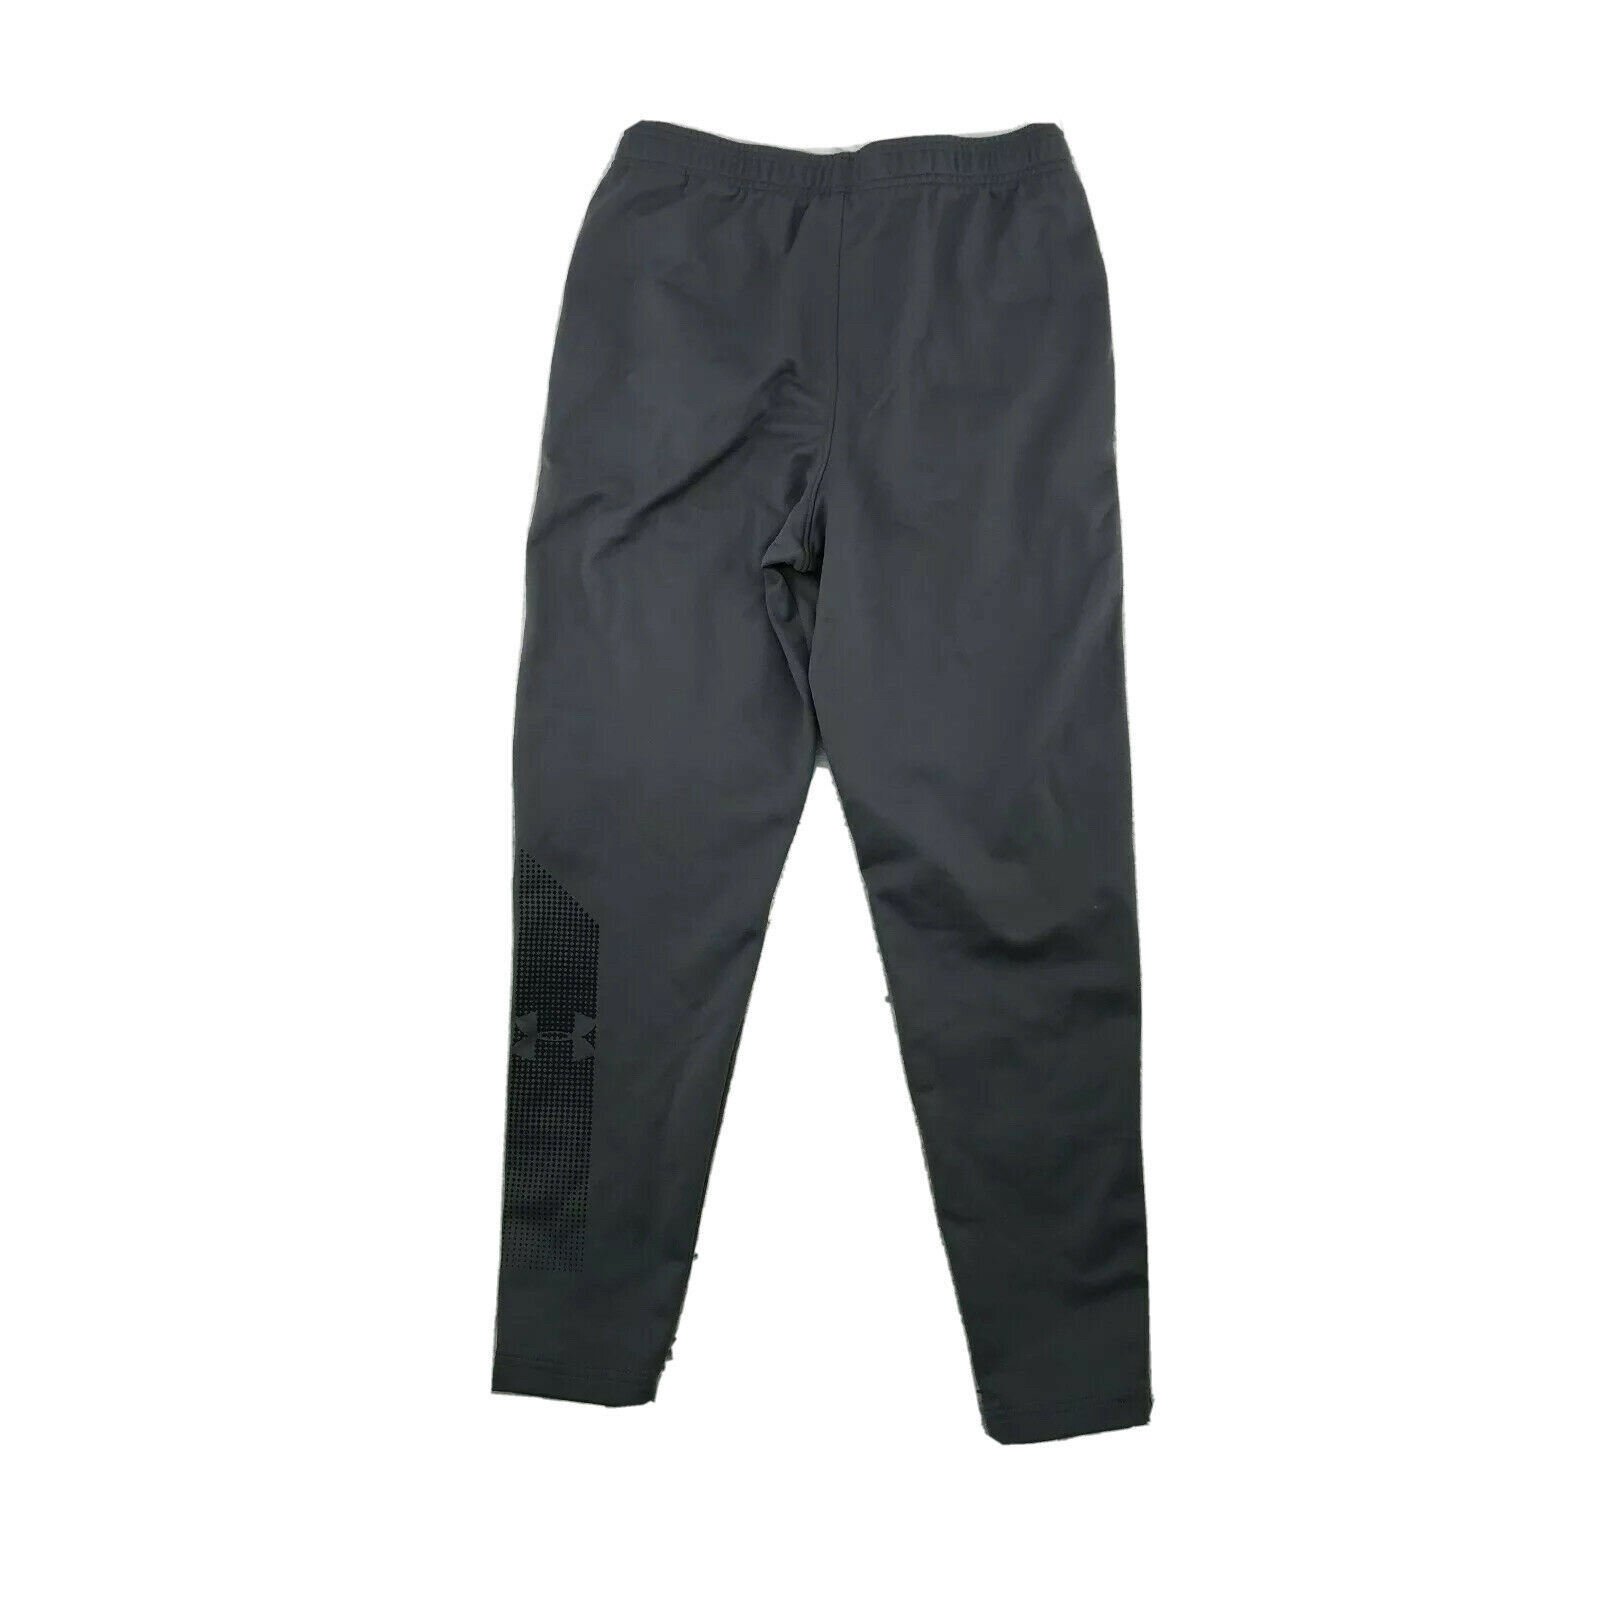 Under Armour Boys' Ua Brawler 2.0 Tapered Pants Size Ymd Medium 24 Inseam I26